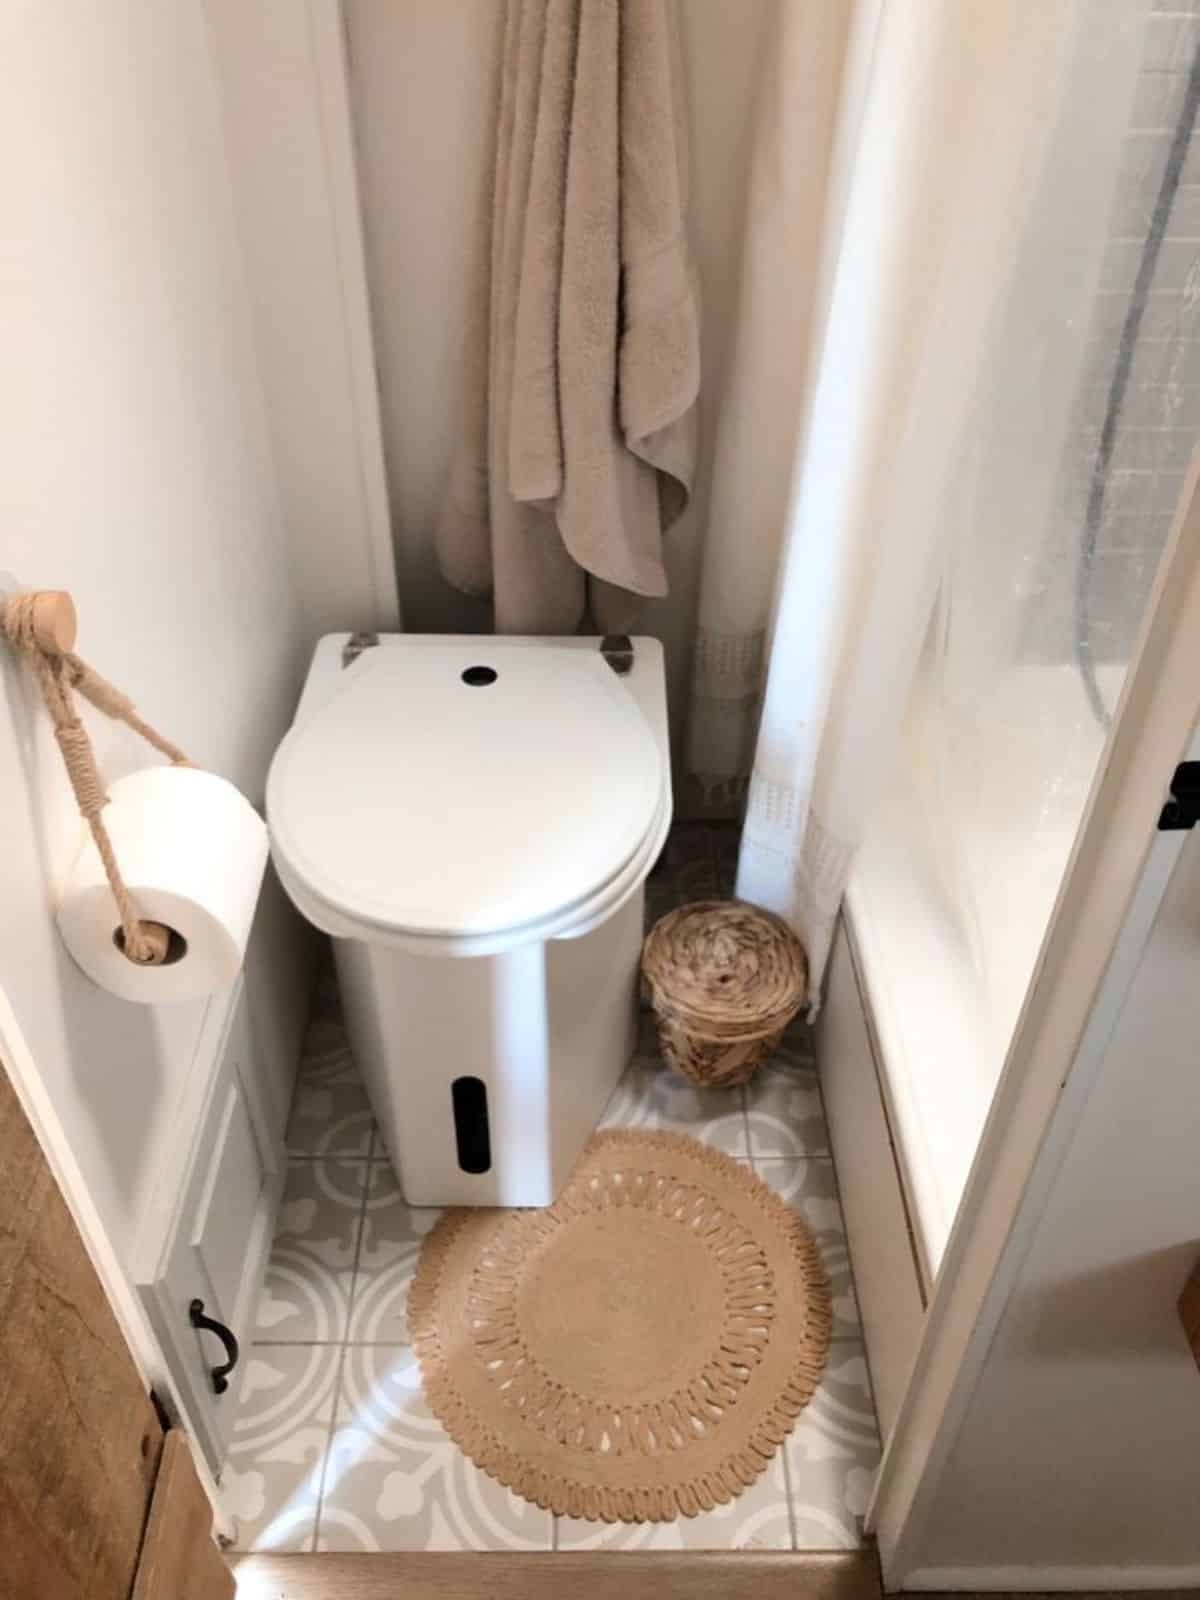 composting toilet instead of regular toilet installed in bathroom